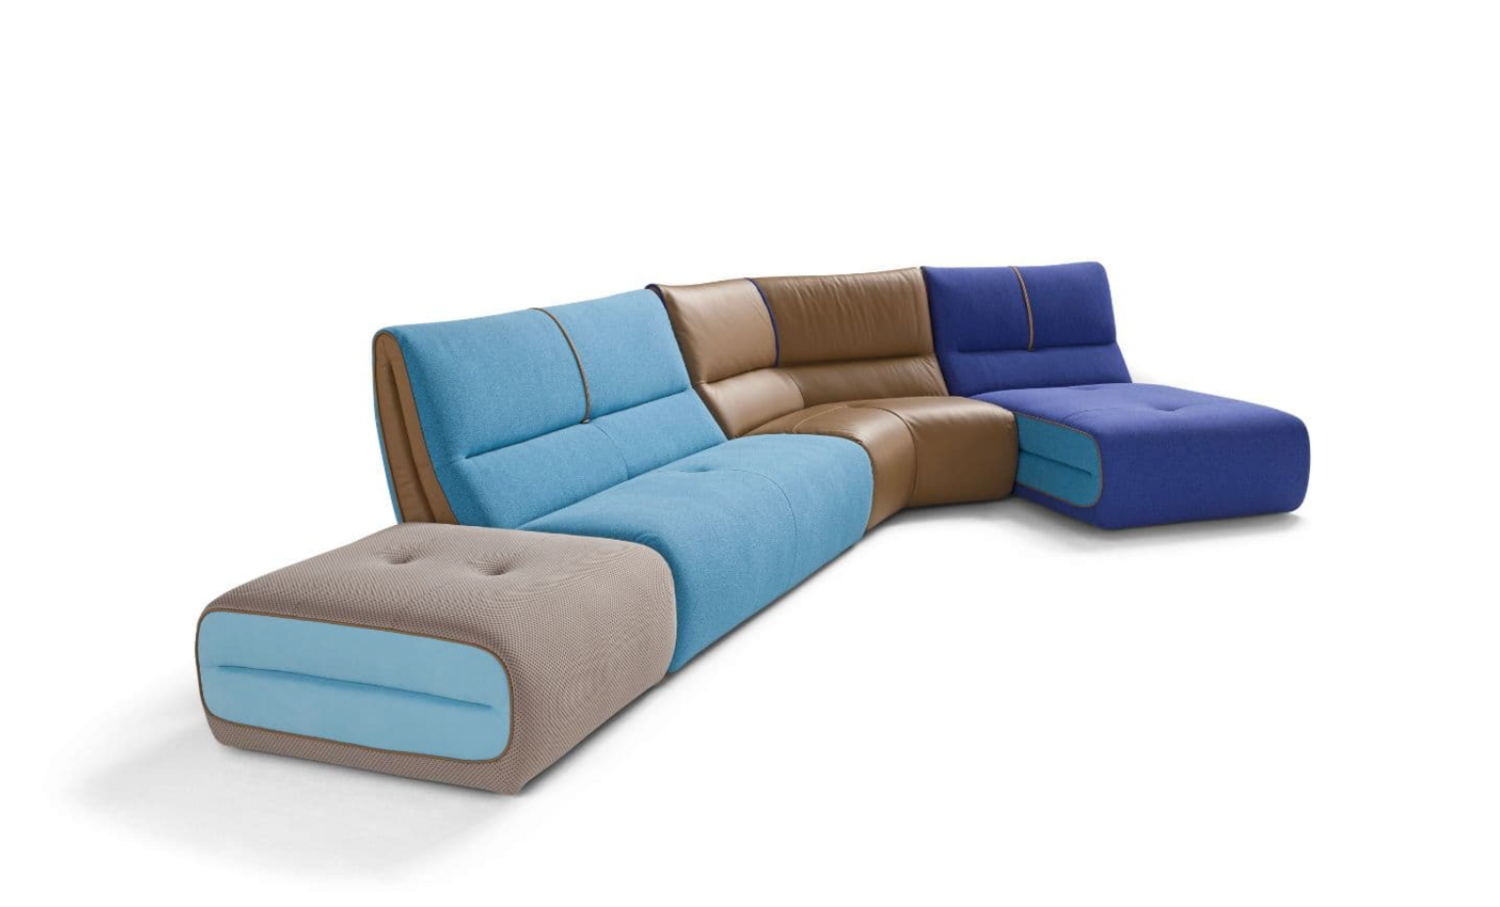 PONGO is the colorful modular sofa